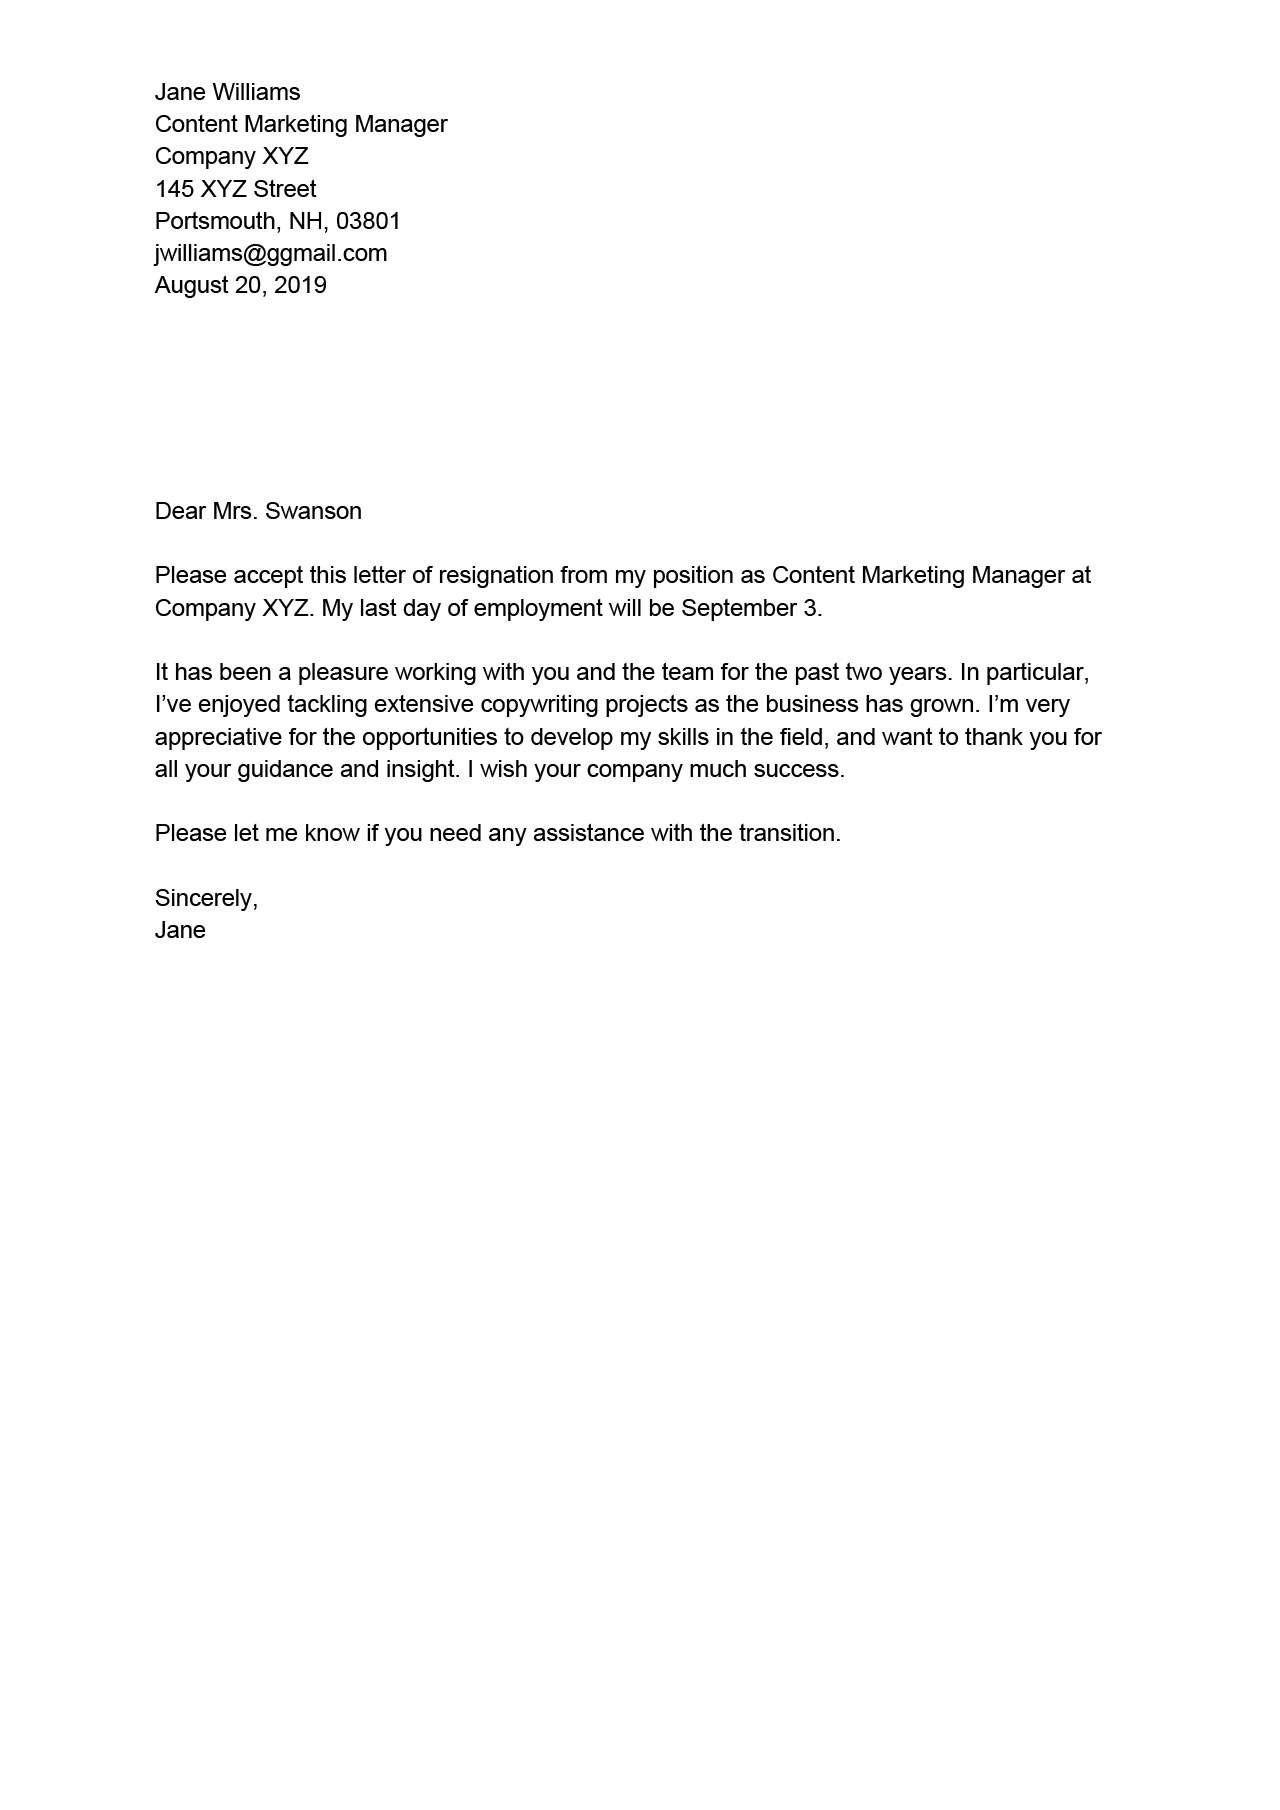 Resignation Letter For Work from jofibostorage.blob.core.windows.net